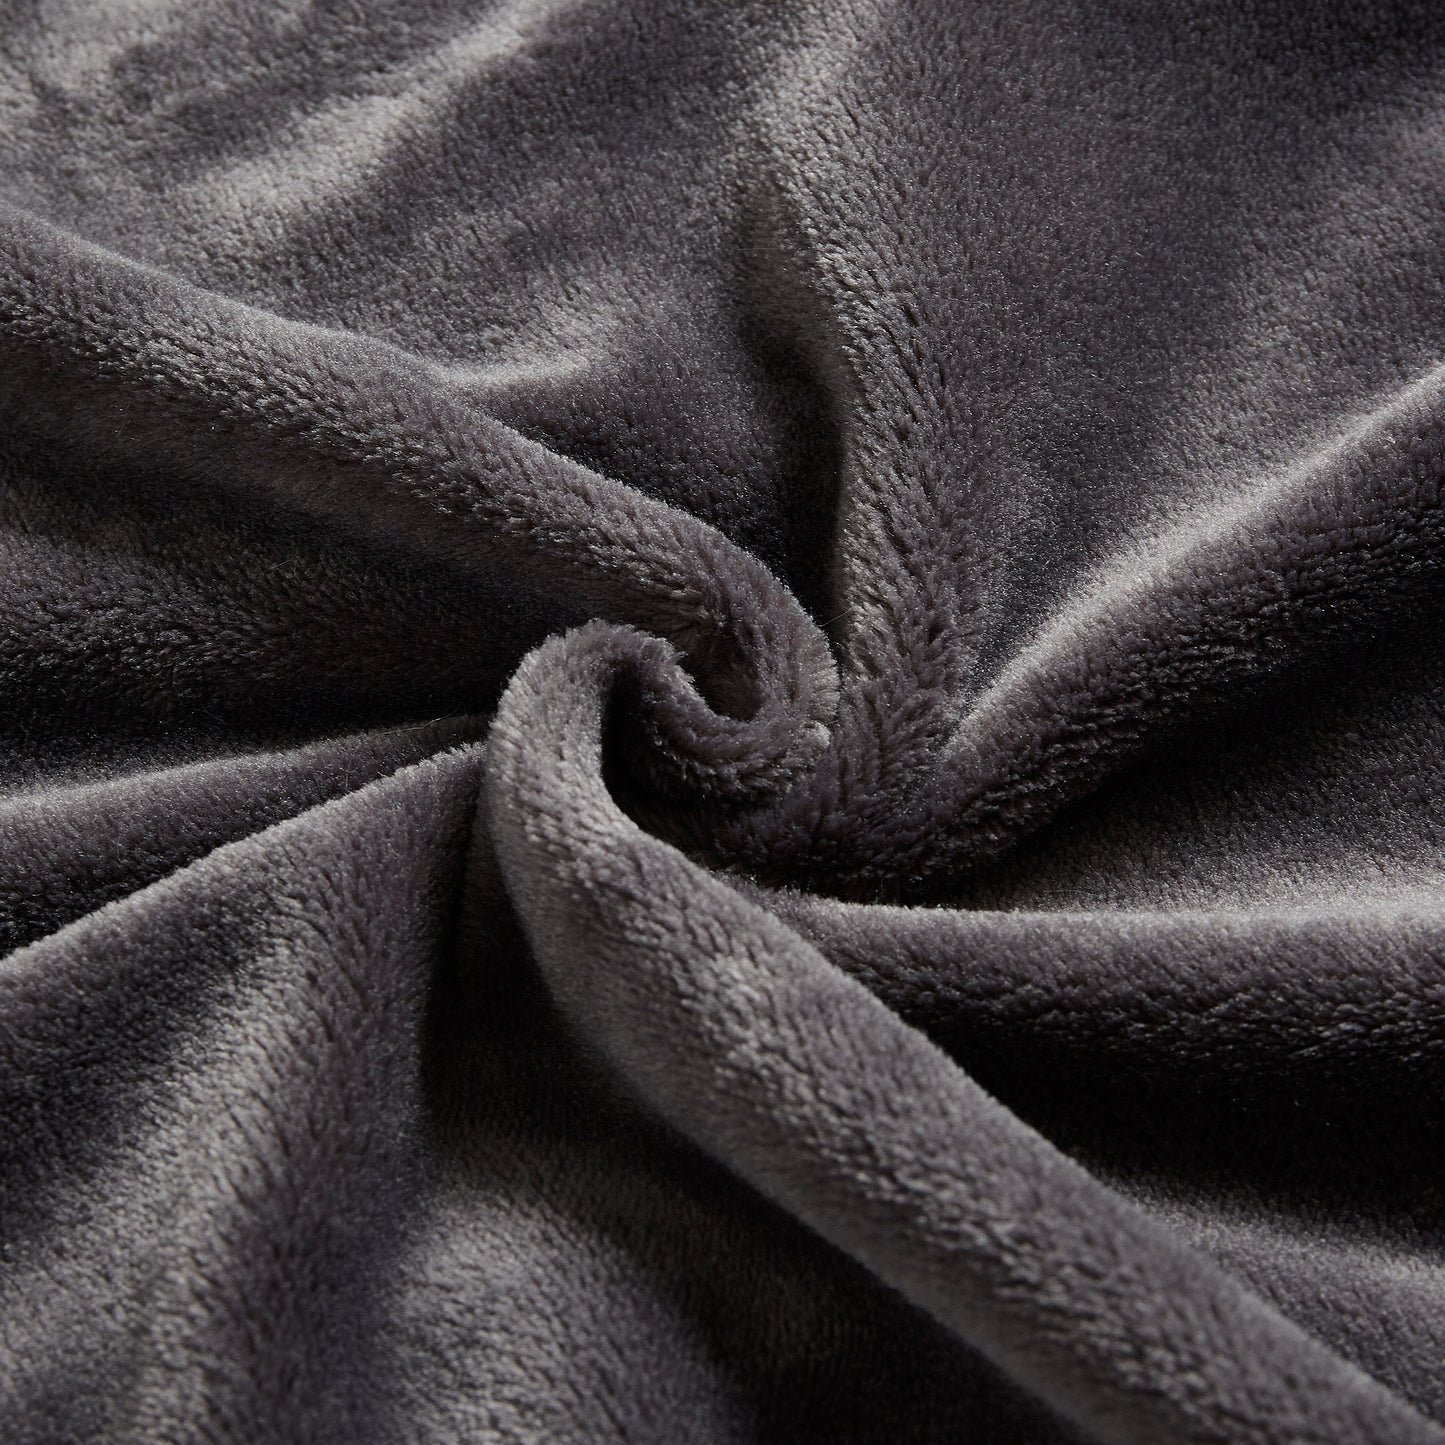 400 Series Solid Plush Blanket - Iron